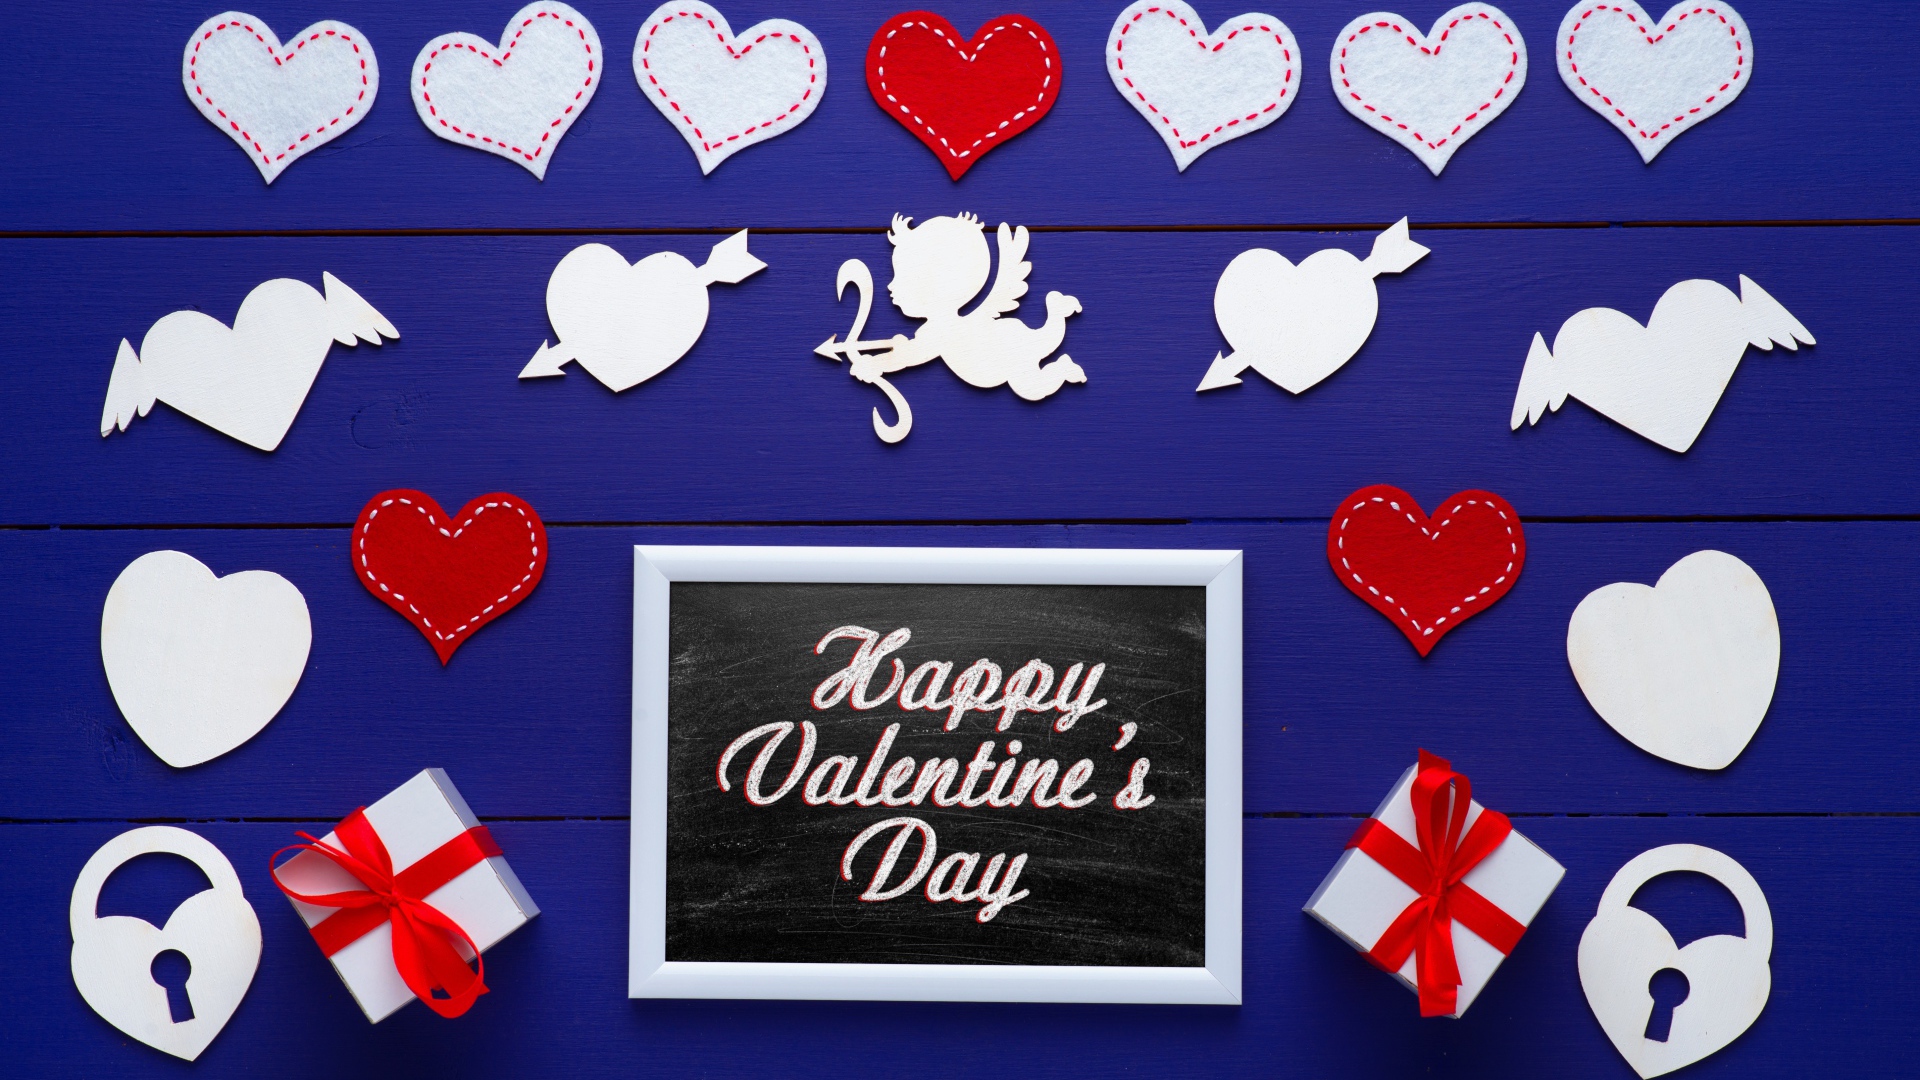 Подарки и сердечки на синем фоне на День Святого Валентина